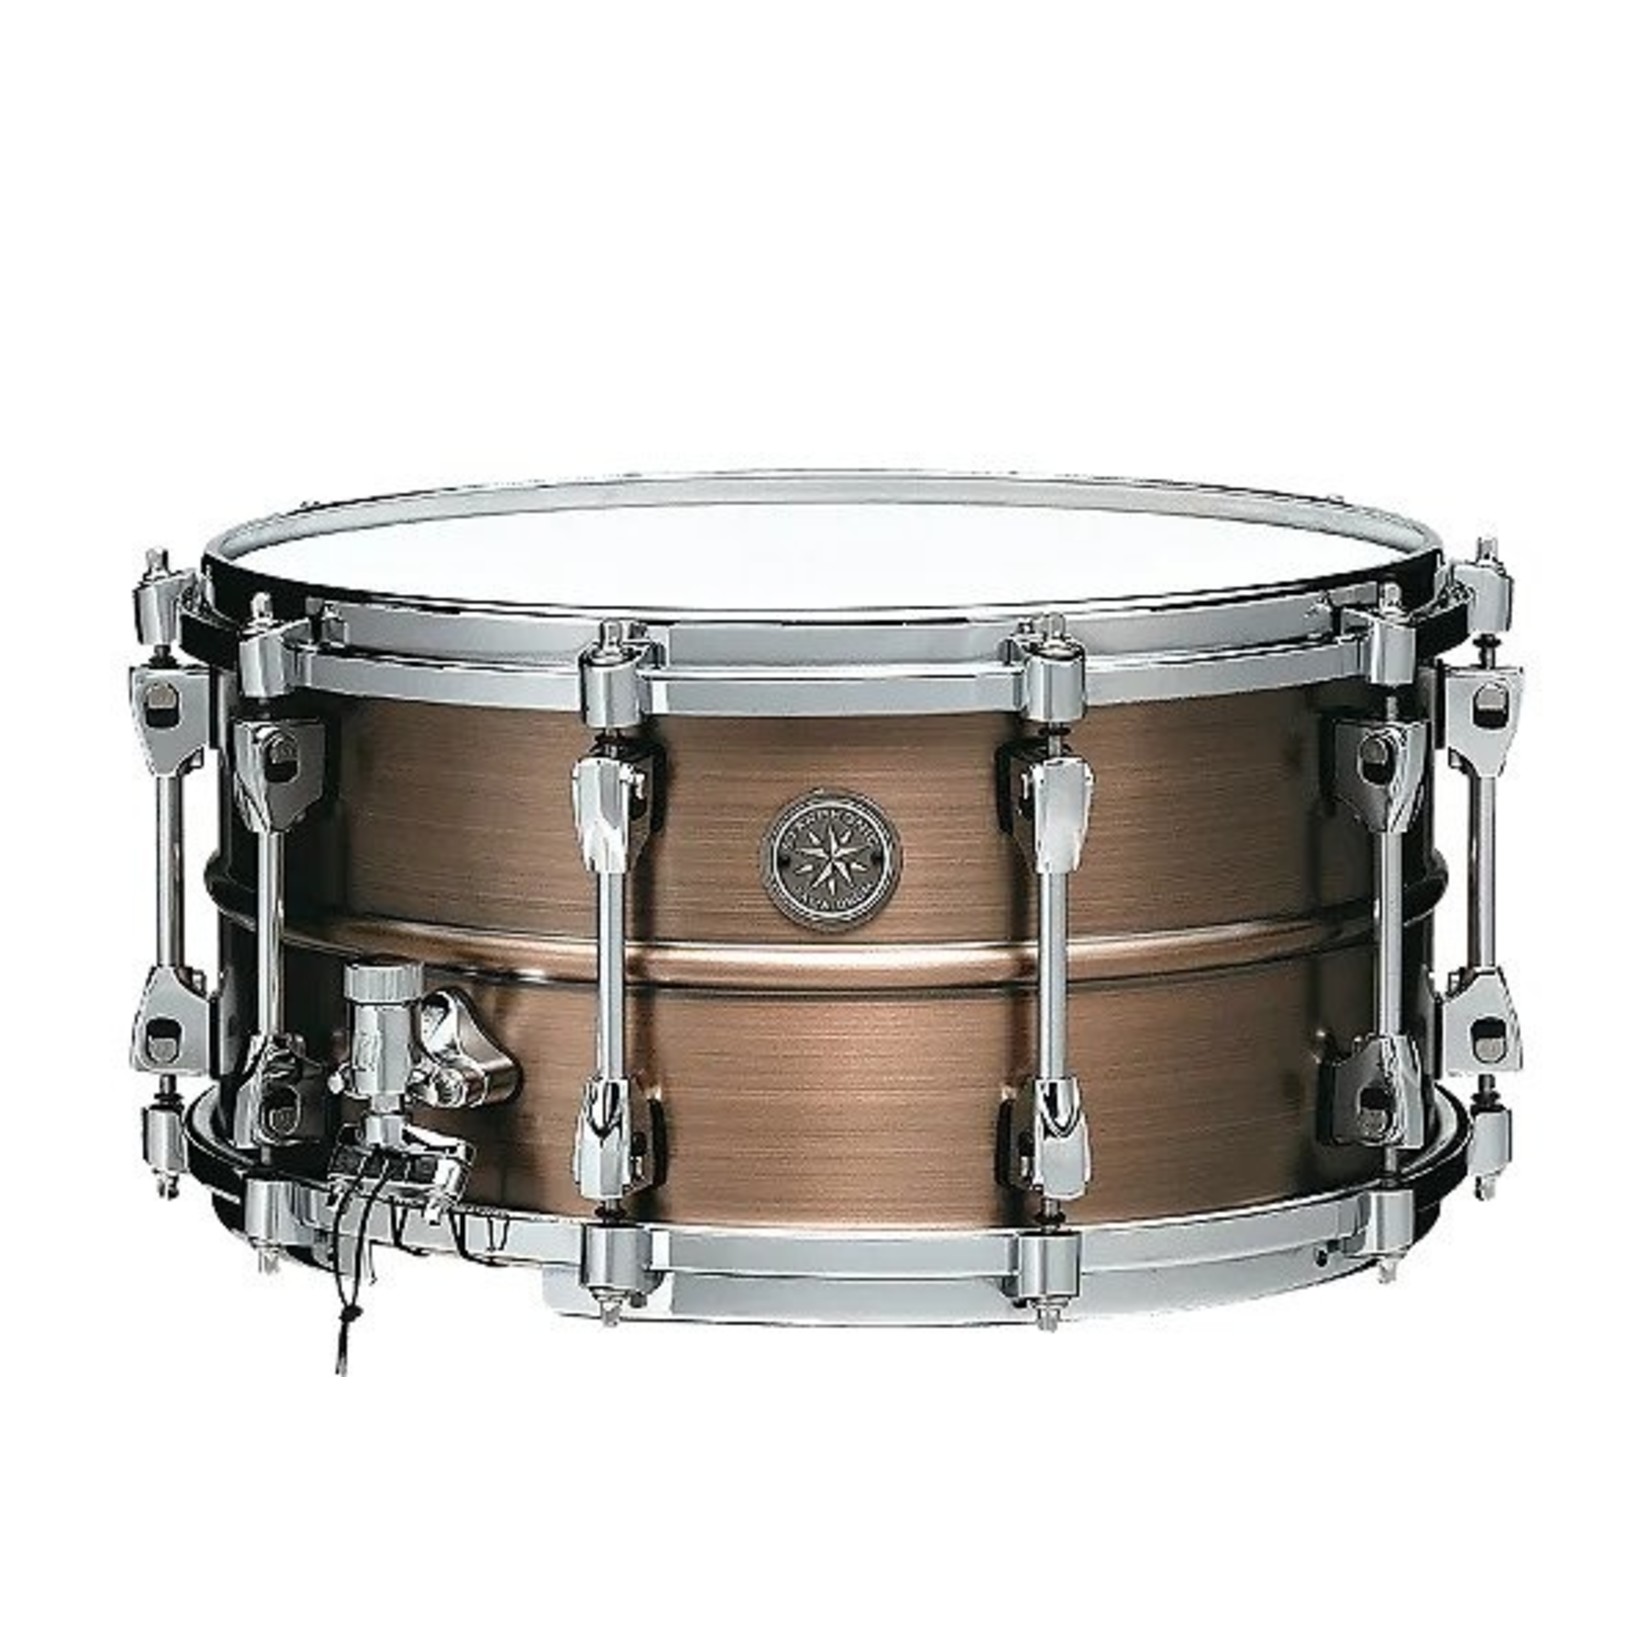 Tama Tama PCP147 Starphonic Series Snare Drum - 7 x 14 inch - Copper